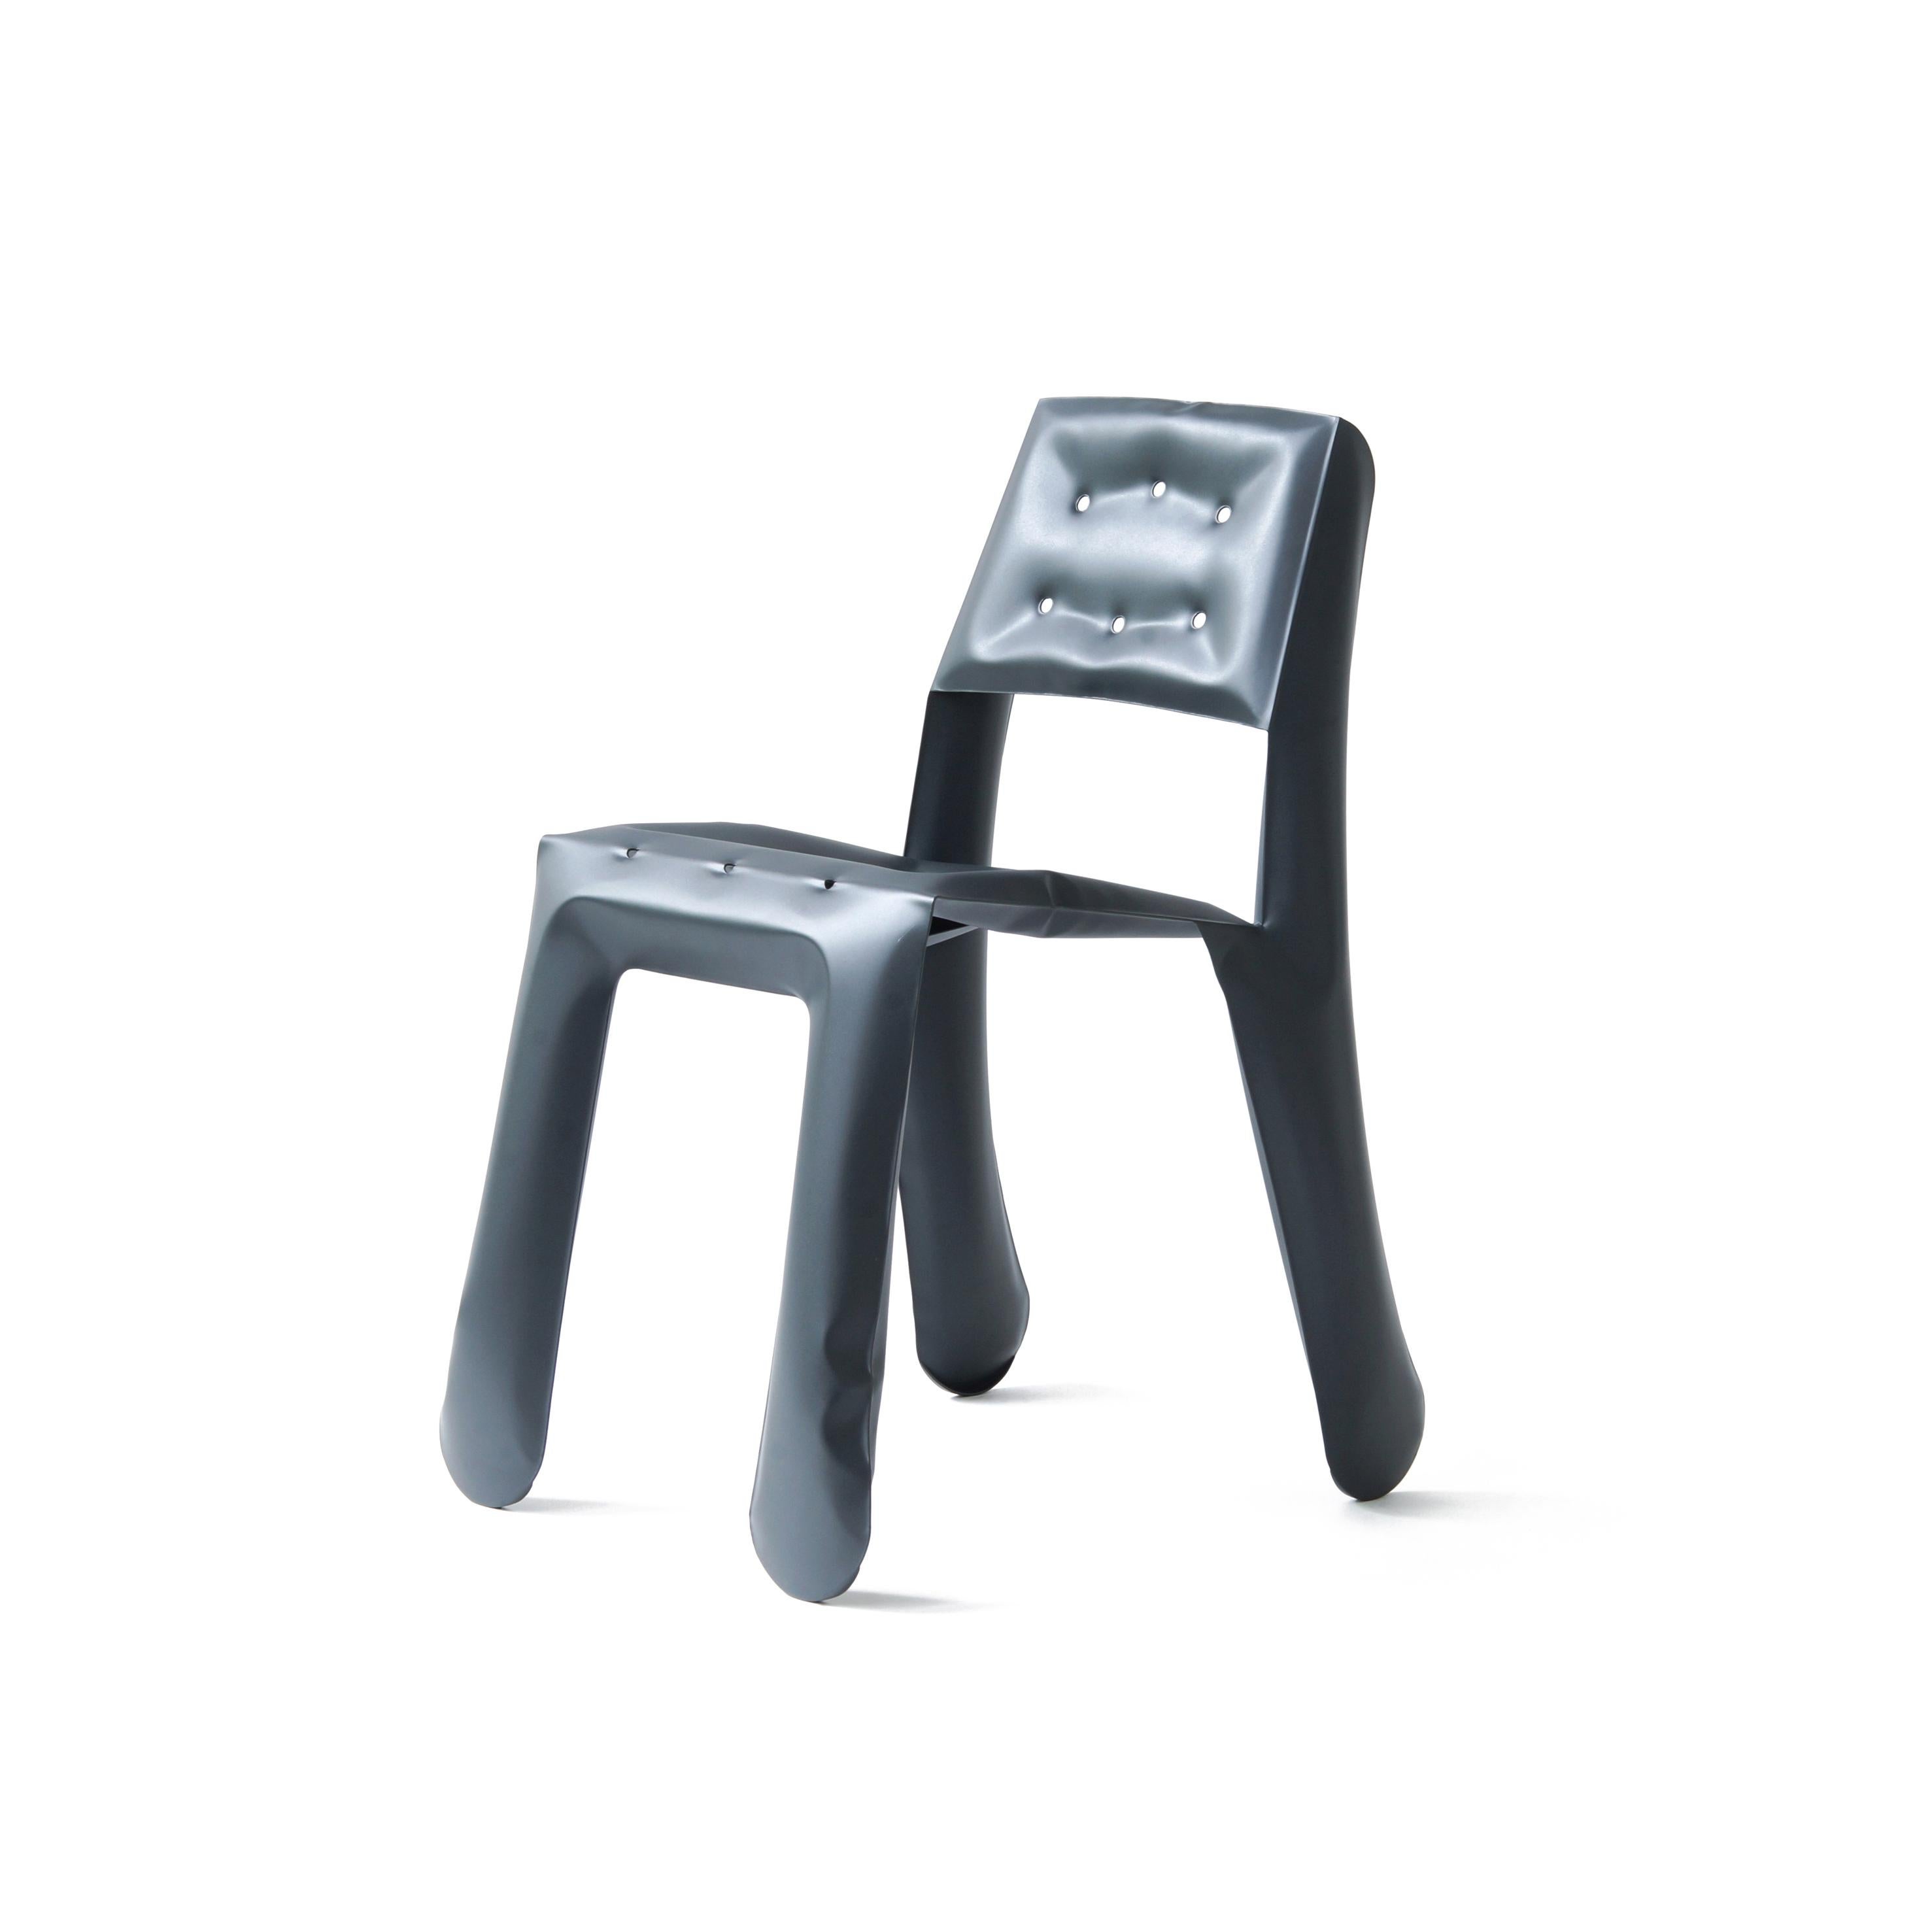 Graphite Aluminum Chippensteel 0.5 Sculptural Chair by Zieta
Dimensions: D 58 x W 46 x H 80 cm 
Material: Aluminum. 
Finish: Powder-coated. Matt finish. 
Available in colors: white matt, beige, black, blue-gray, graphite, moss-gray, and umbra-grey.